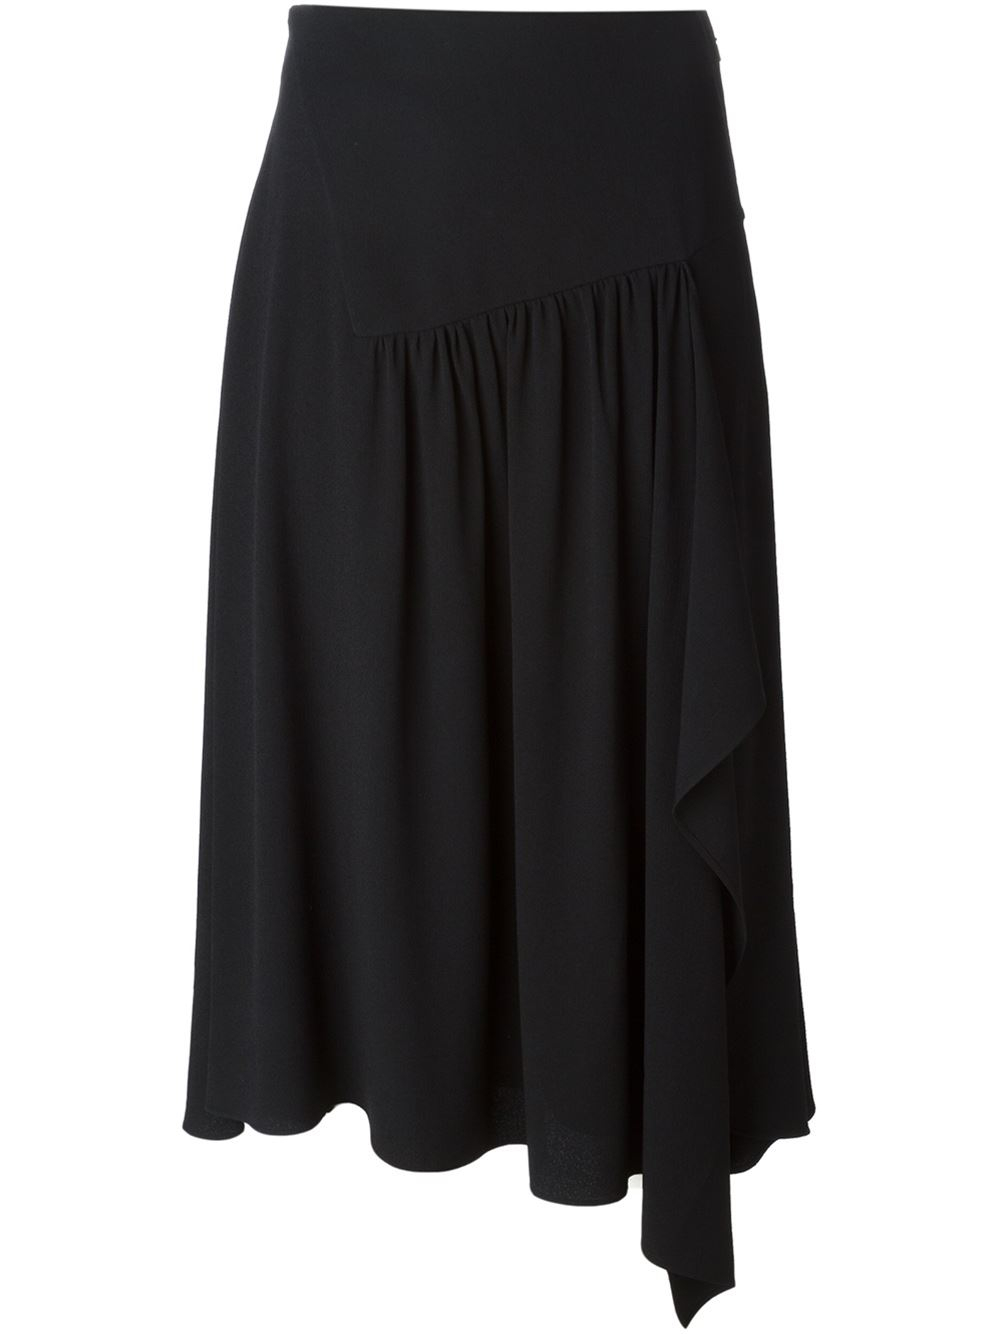 Chloé Asymmetric Skirt in Black | Lyst